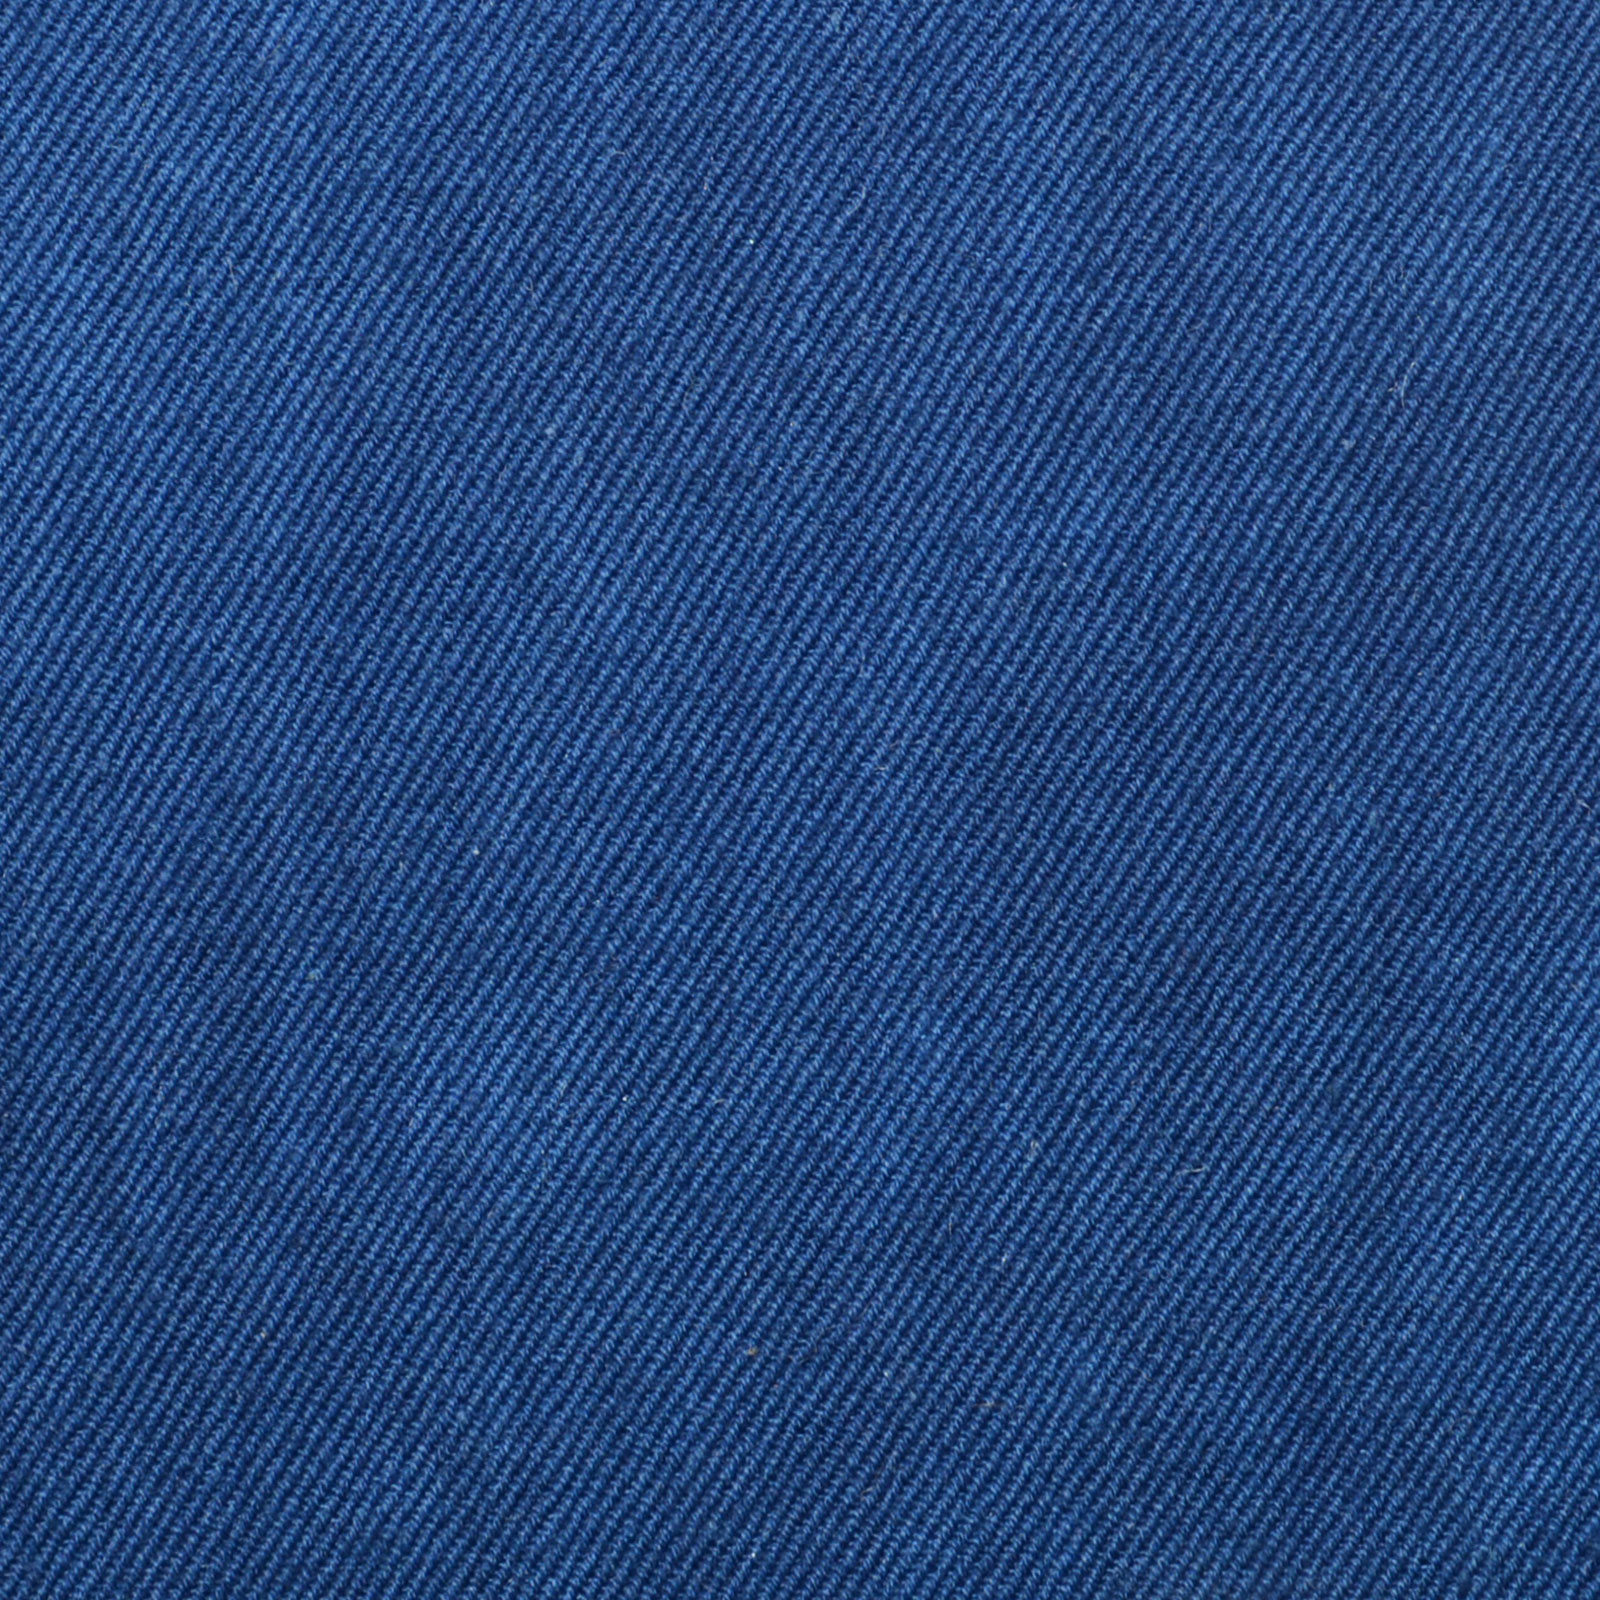 Organic Handloom-Woven Blue Denim Fabric - Kala / Desi Cotton From